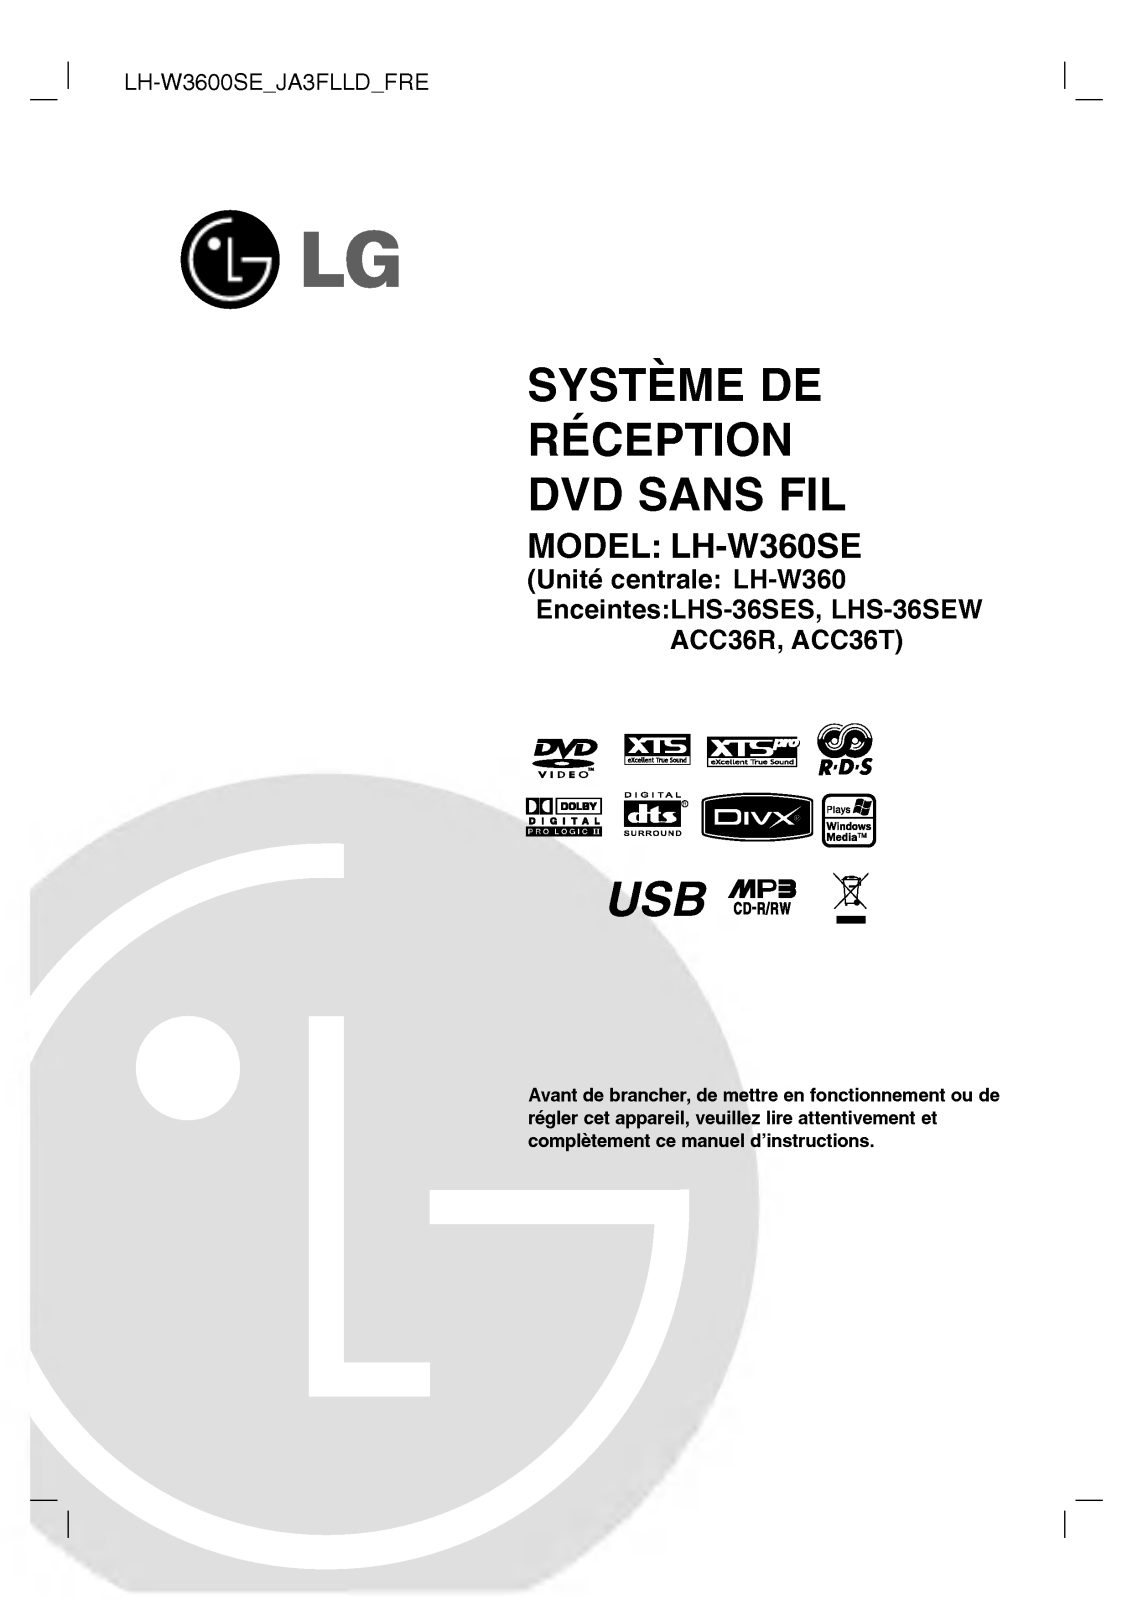 LG LH-W360 User Manual